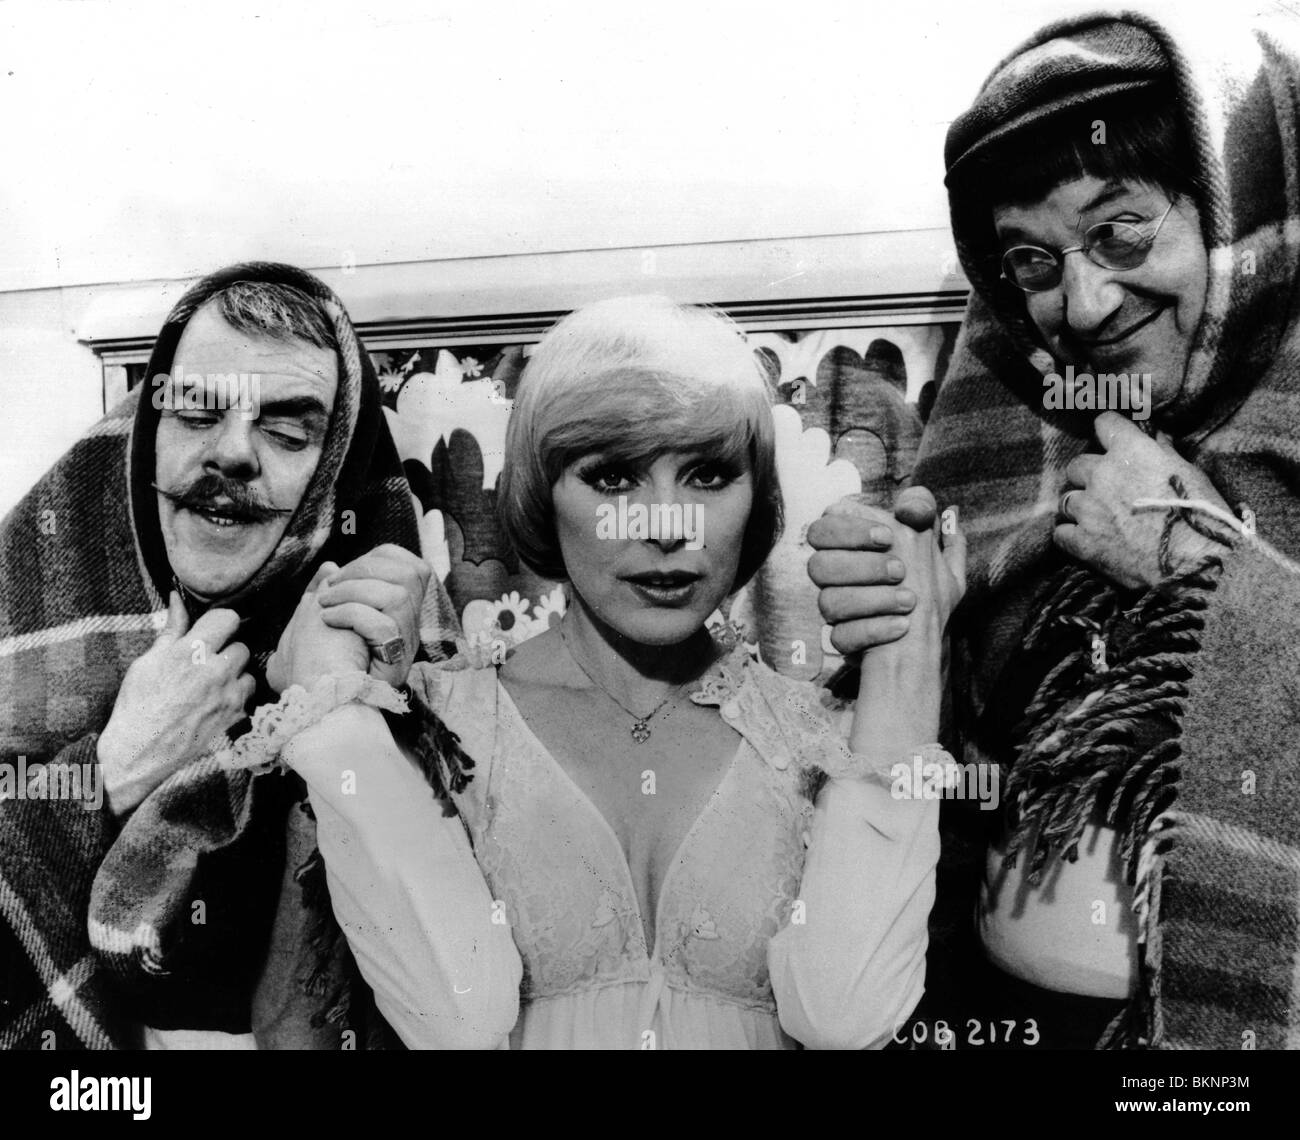 CARRY ON BEHIND (1975) WINDSOR DAVIES, ELKIE SOMMER, JACK DOUGLAS COBH 001P Stock Photo